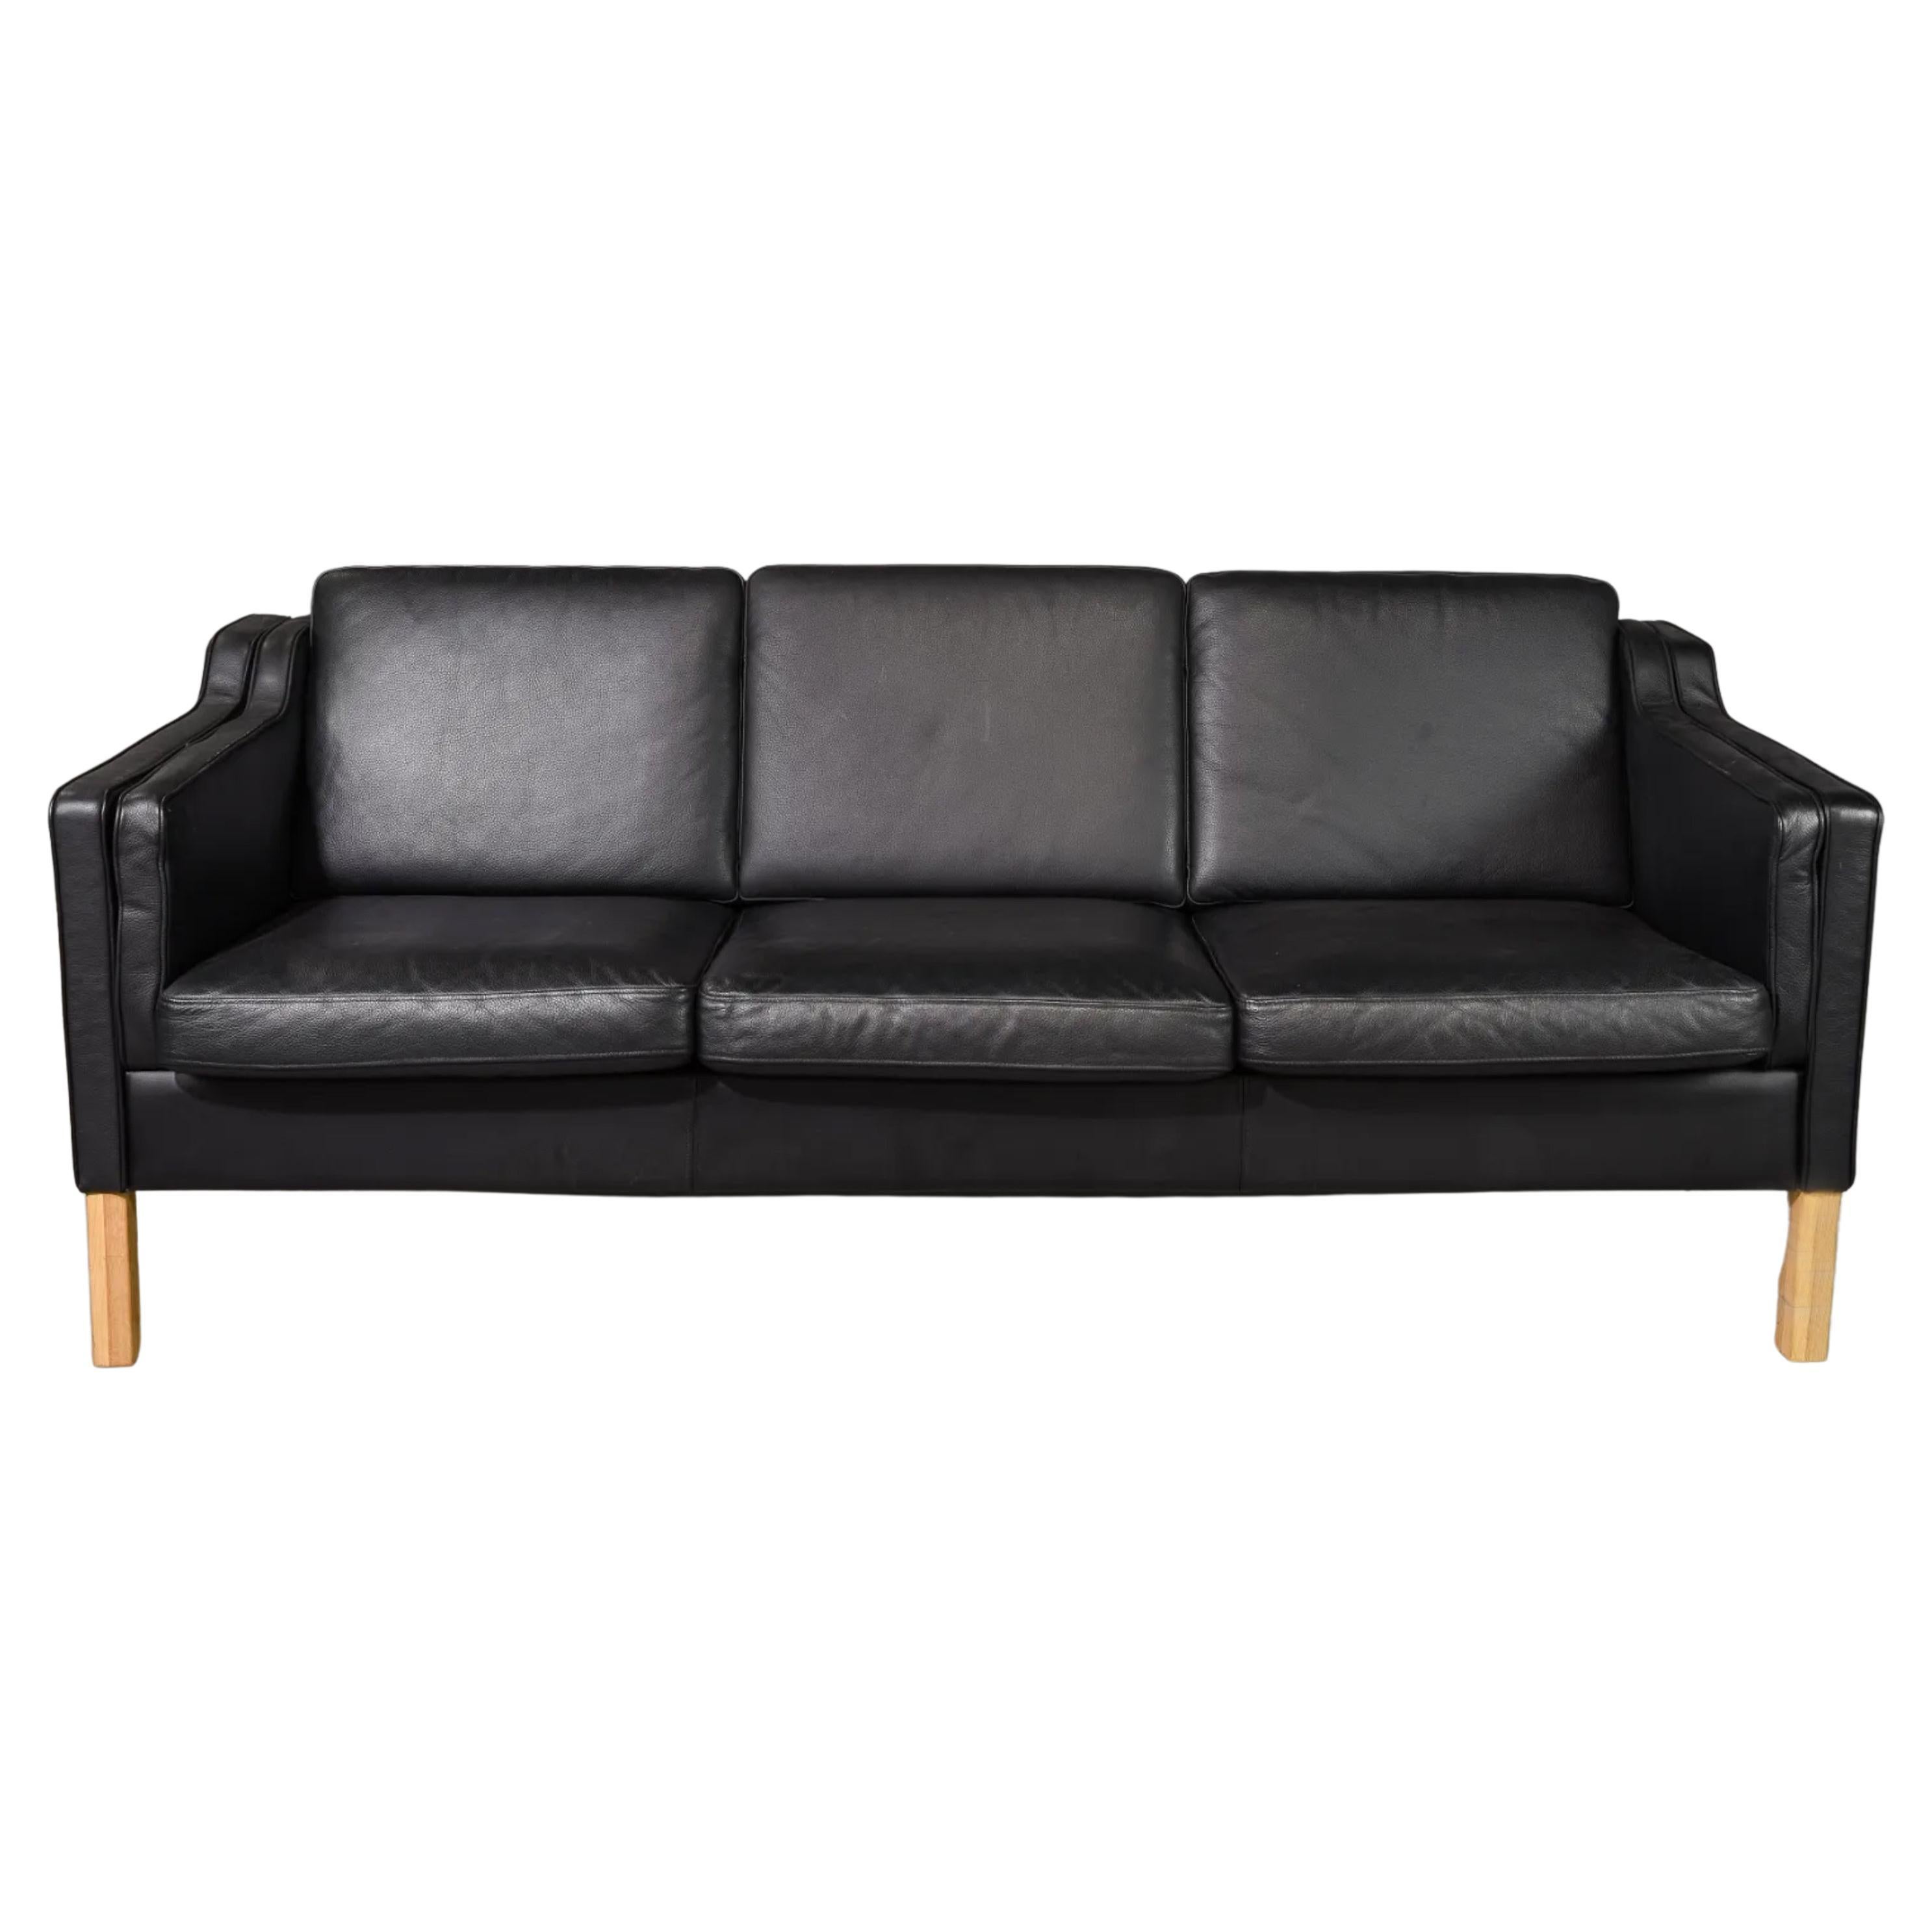 Superb Midcentury Danish Modern Beautiful Black Leather 3 Seat Sofa Birch Legs For Sale